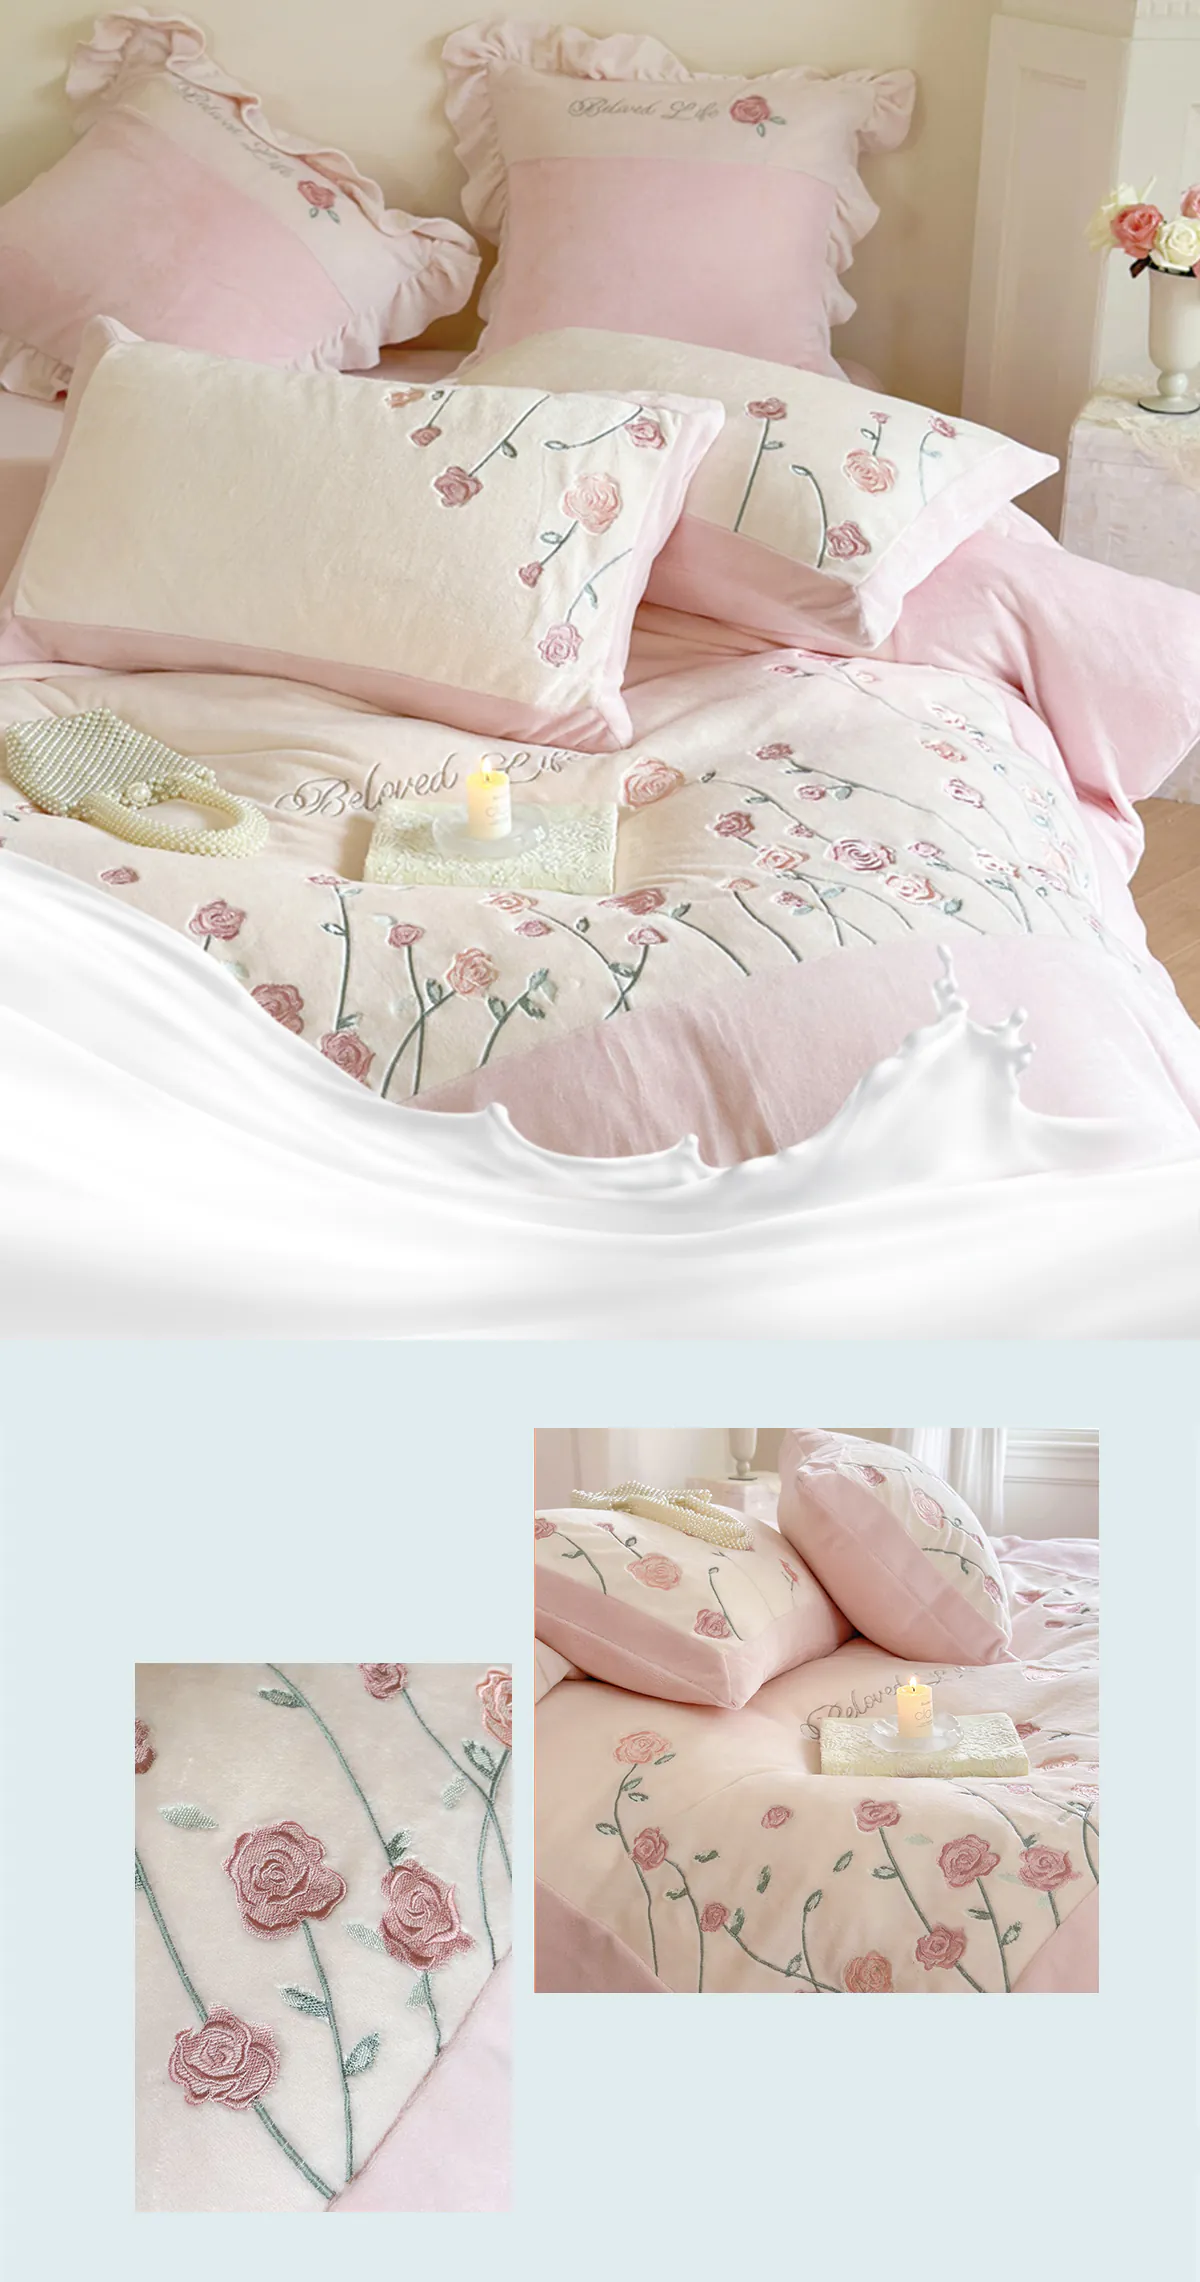 Aesthetic-A-Class-Milk-Velvet-Duvet-Cover-Flat-Sheet-Pillowcase-4-Pcs-Set10